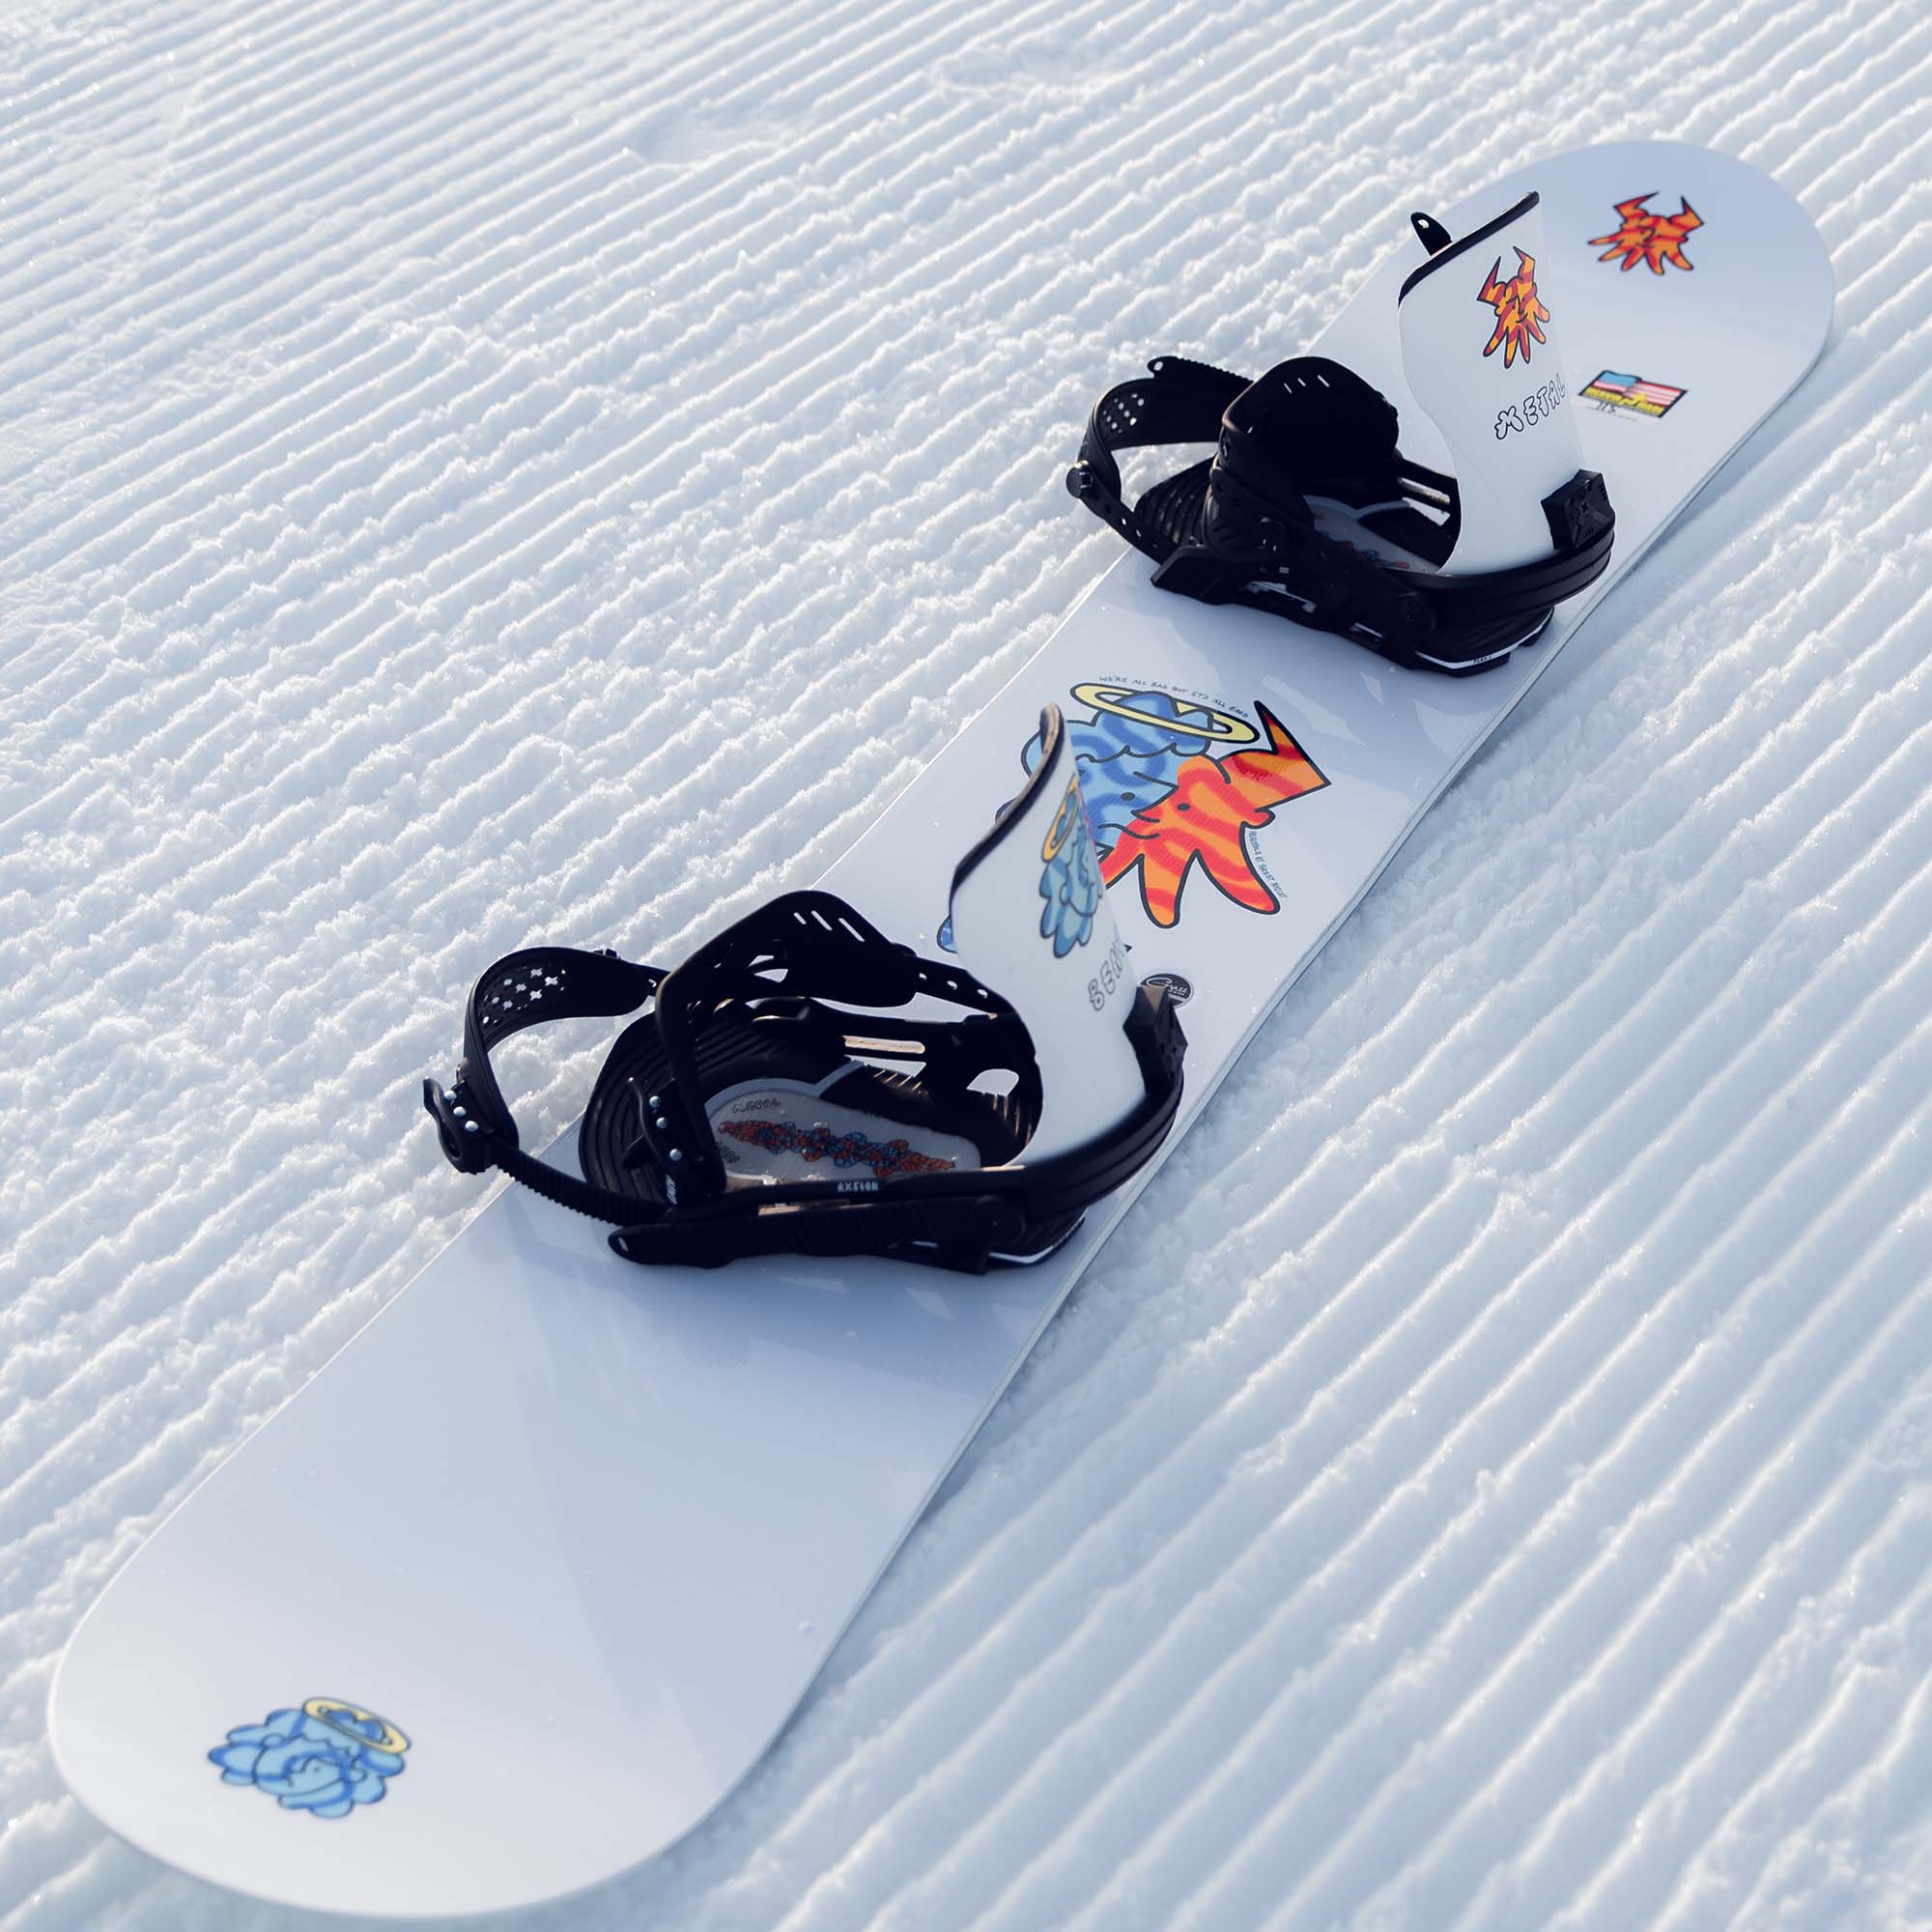 GNU Head Space All Mountain/Freestyle Snowboard